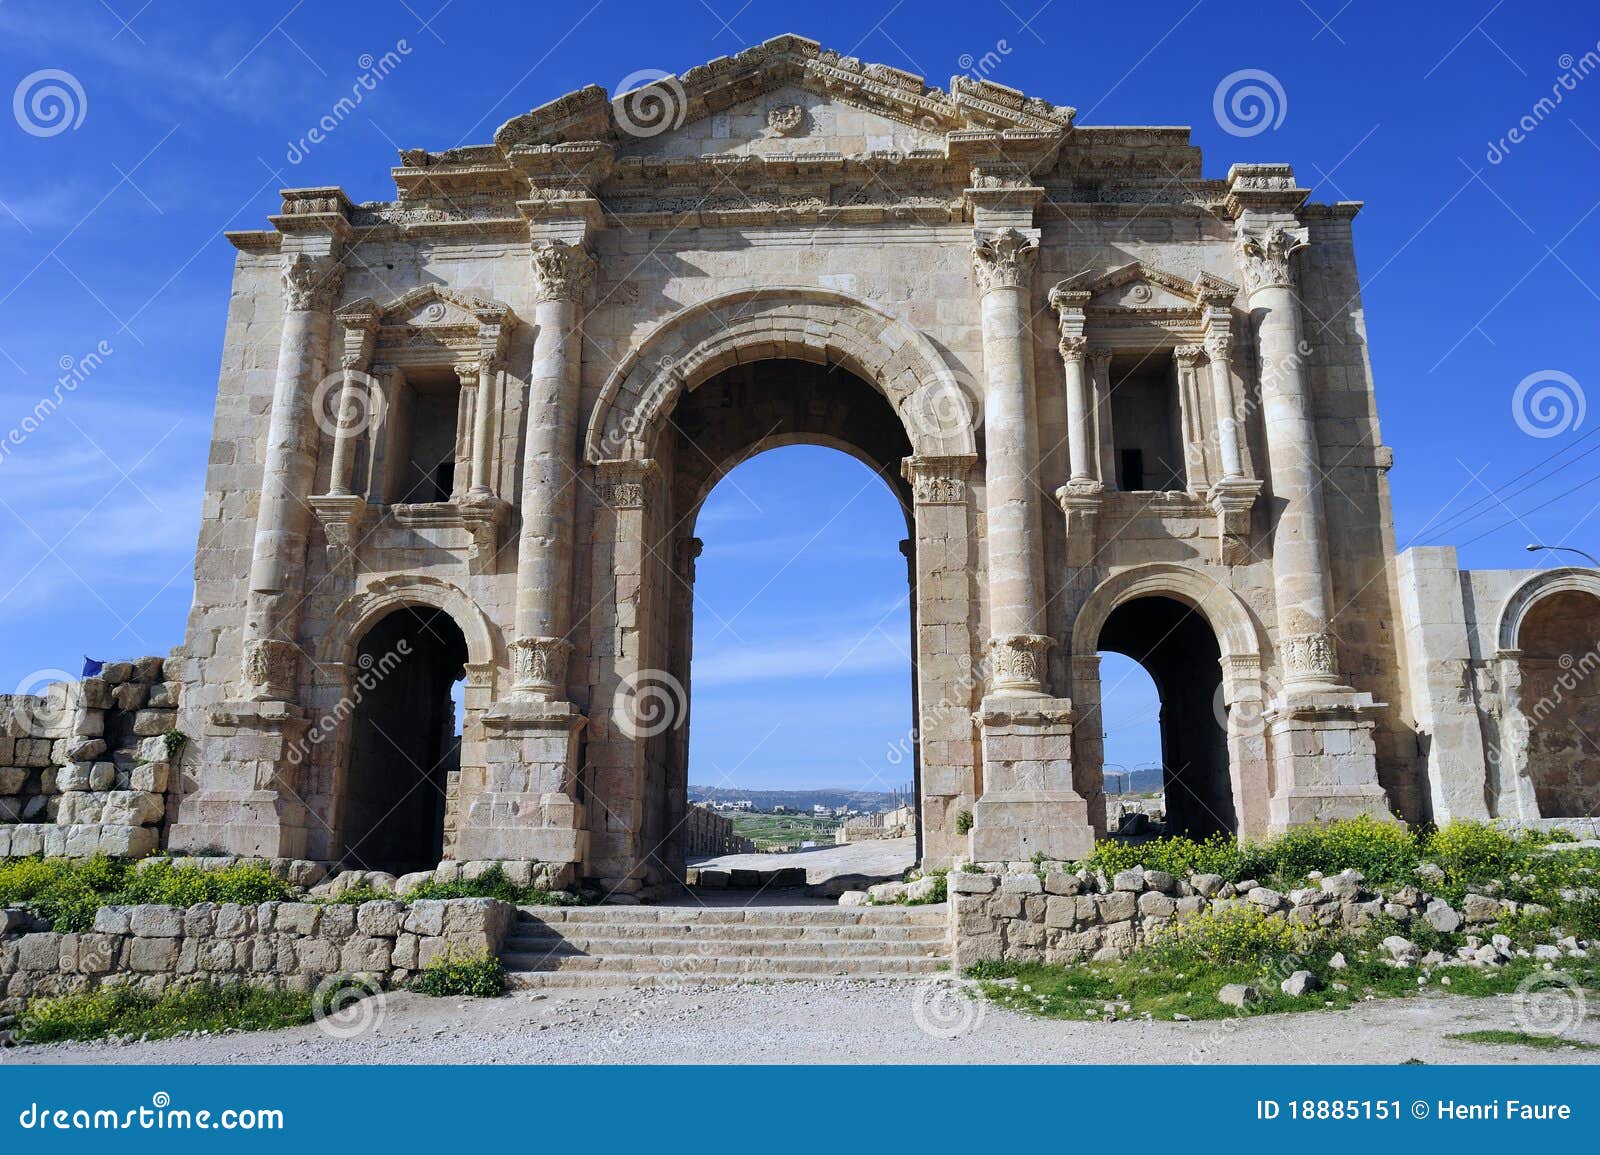 the hadrian gate in jerash. jordan